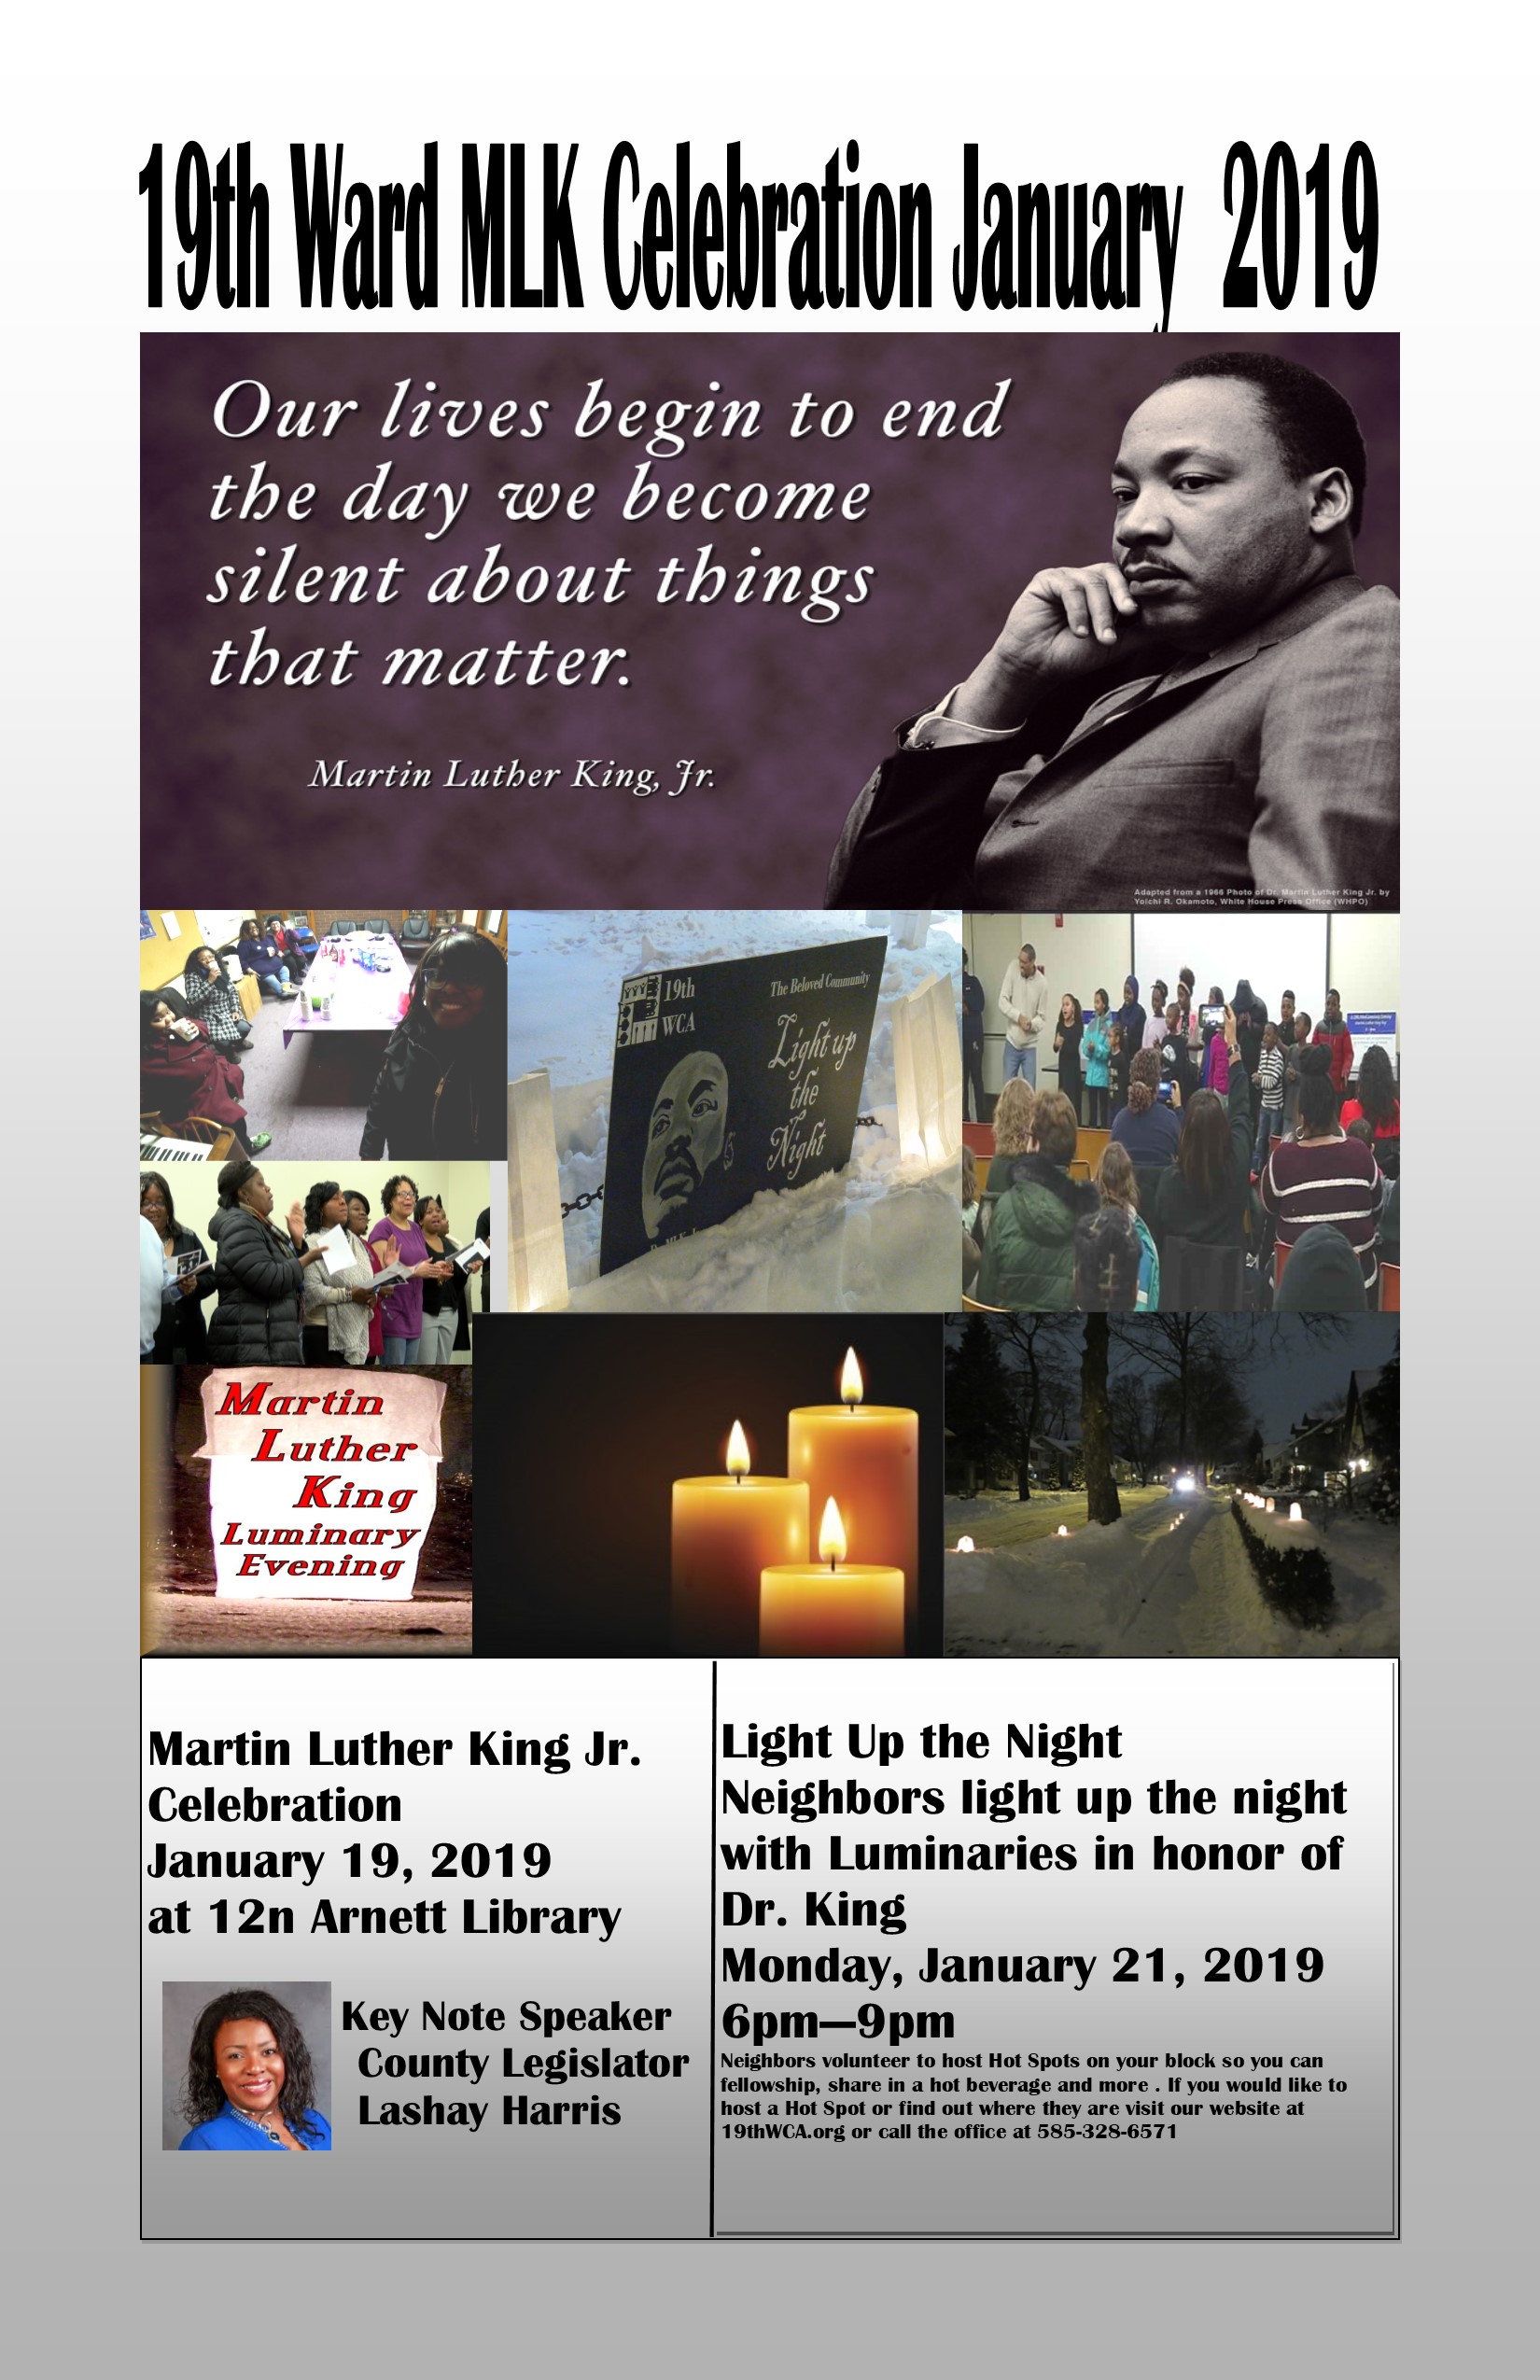 21st Annual Martin Luther King Jr. Celebration